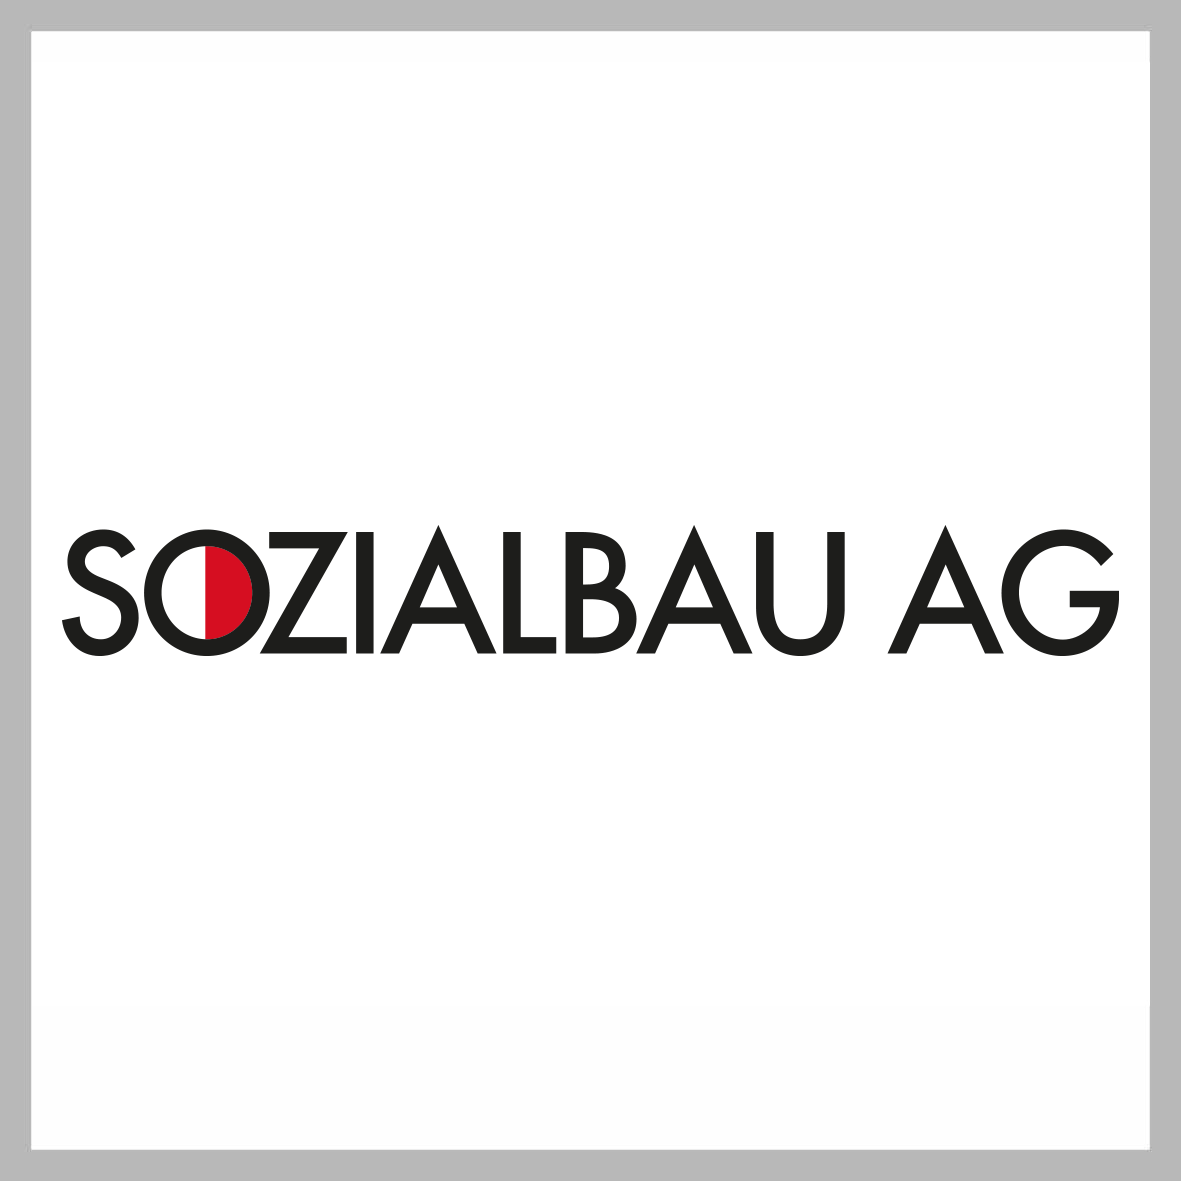 Logo Sozialbau AG in Farbe auf weiß, quadratisch, grau umrandet